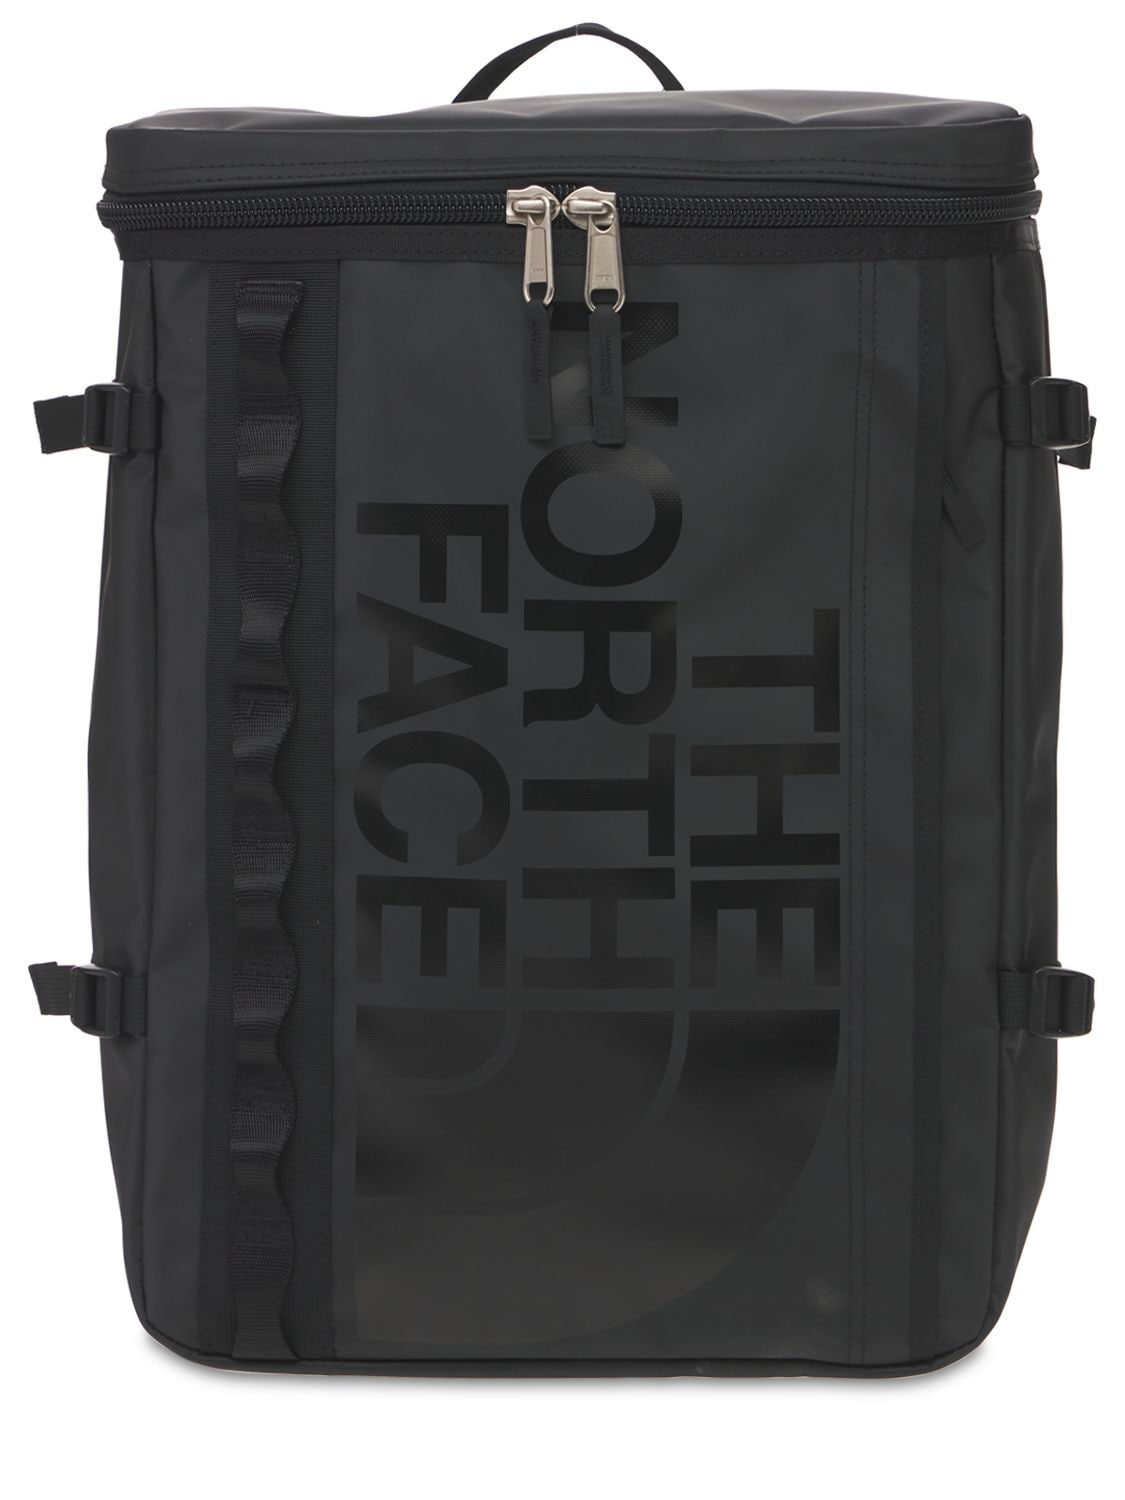 Image of 30l Base Camp Fuse Box Backpack